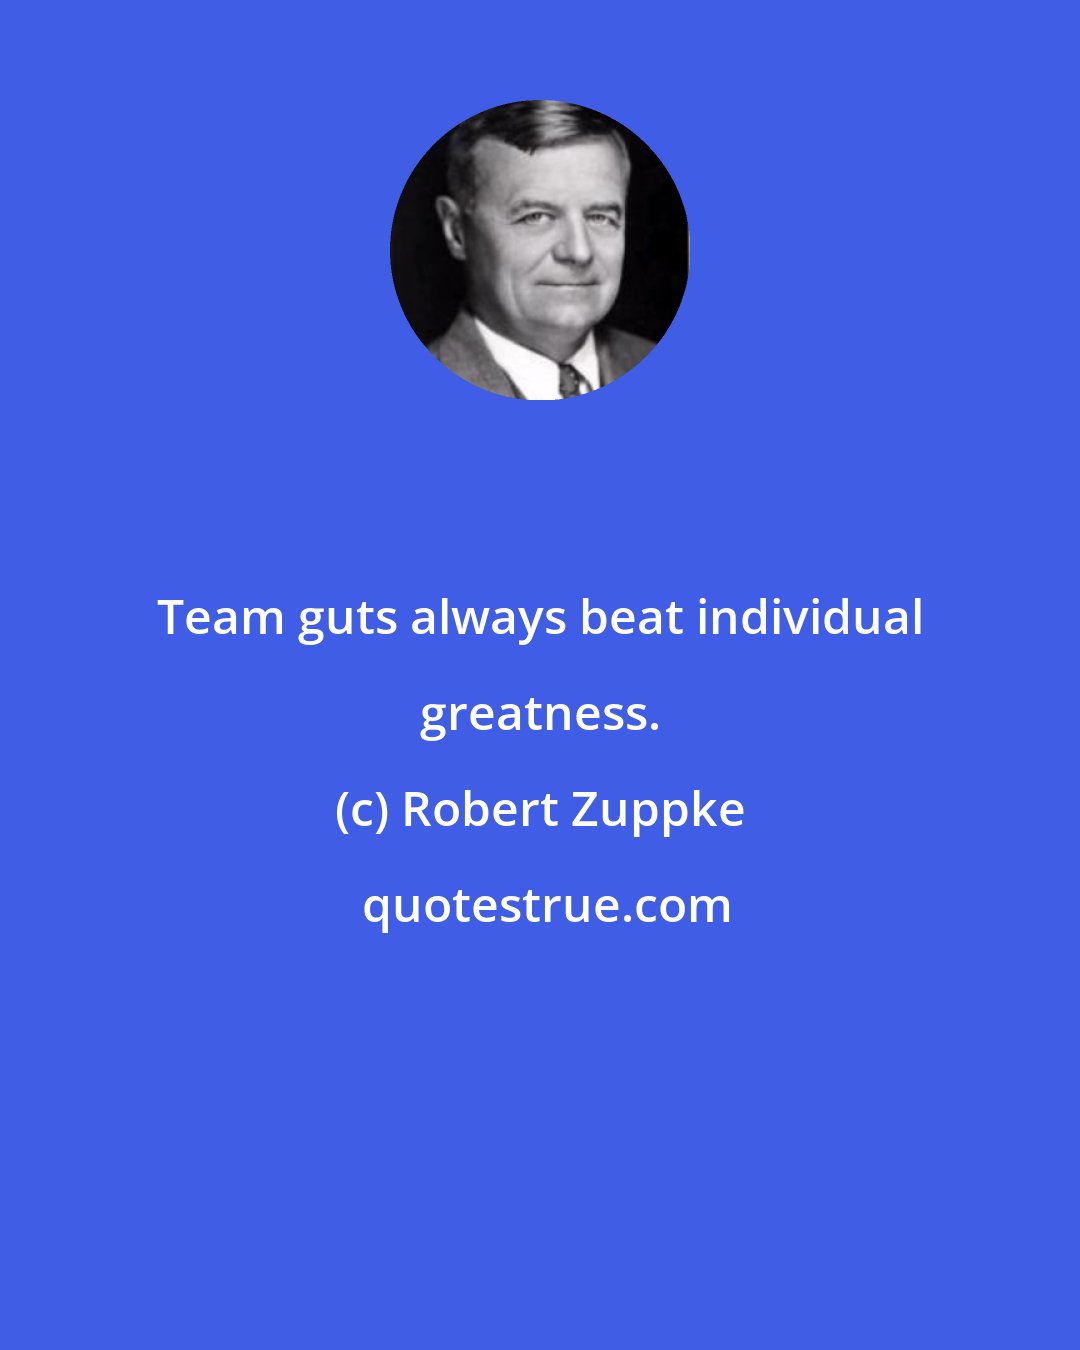 Robert Zuppke: Team guts always beat individual greatness.